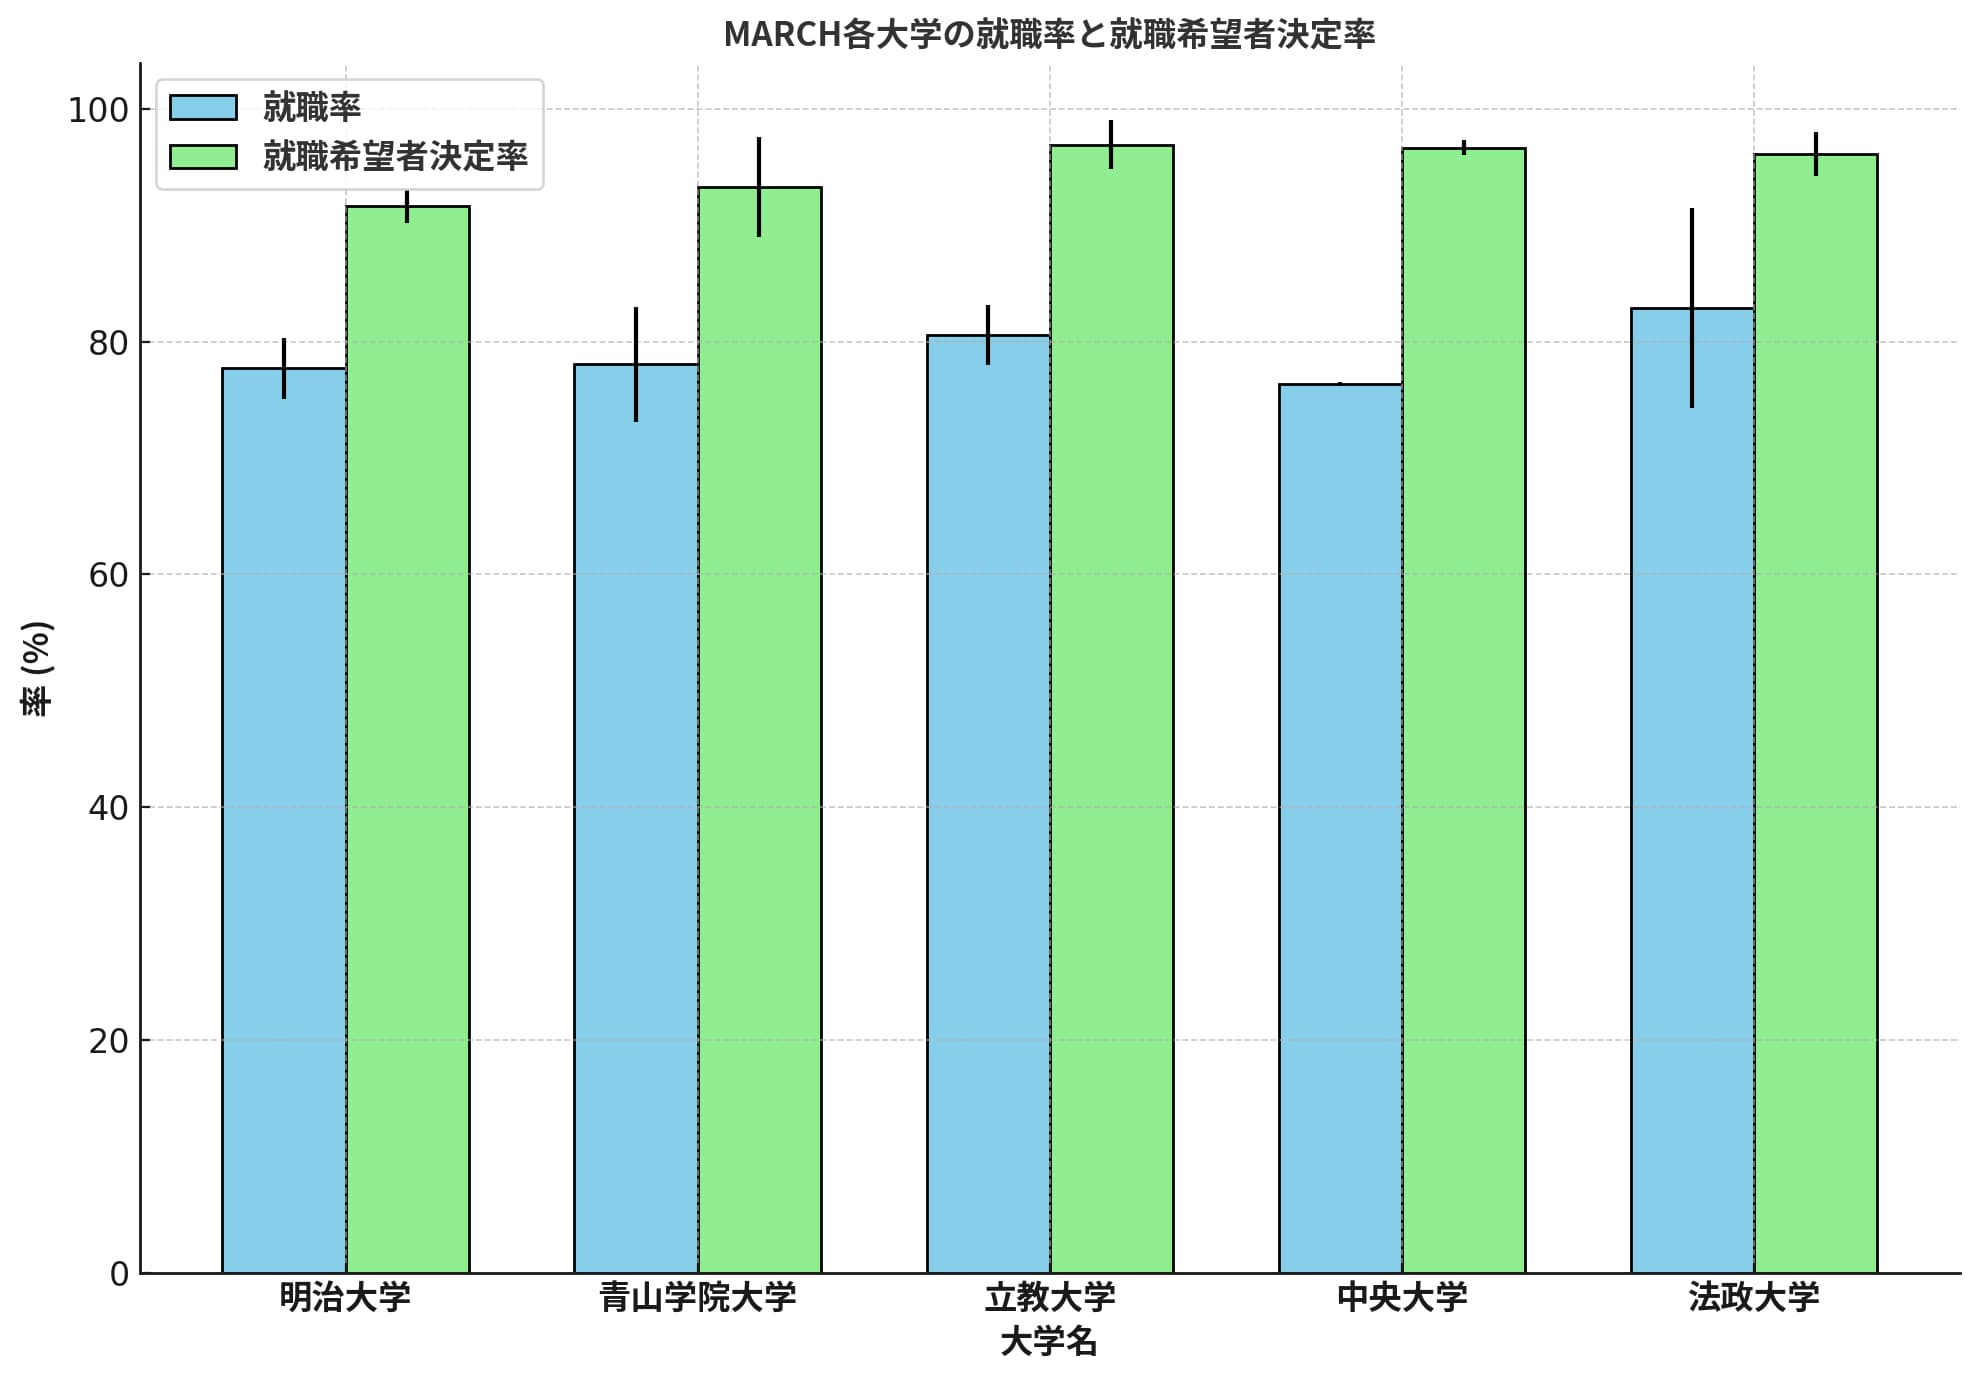 MARCH各大学の就職率と就職希望者決定率。各大学の就職率（青色）と就職希望者決定率（緑色）は、信頼区間のエラーバーを含めて棒グラフで表示